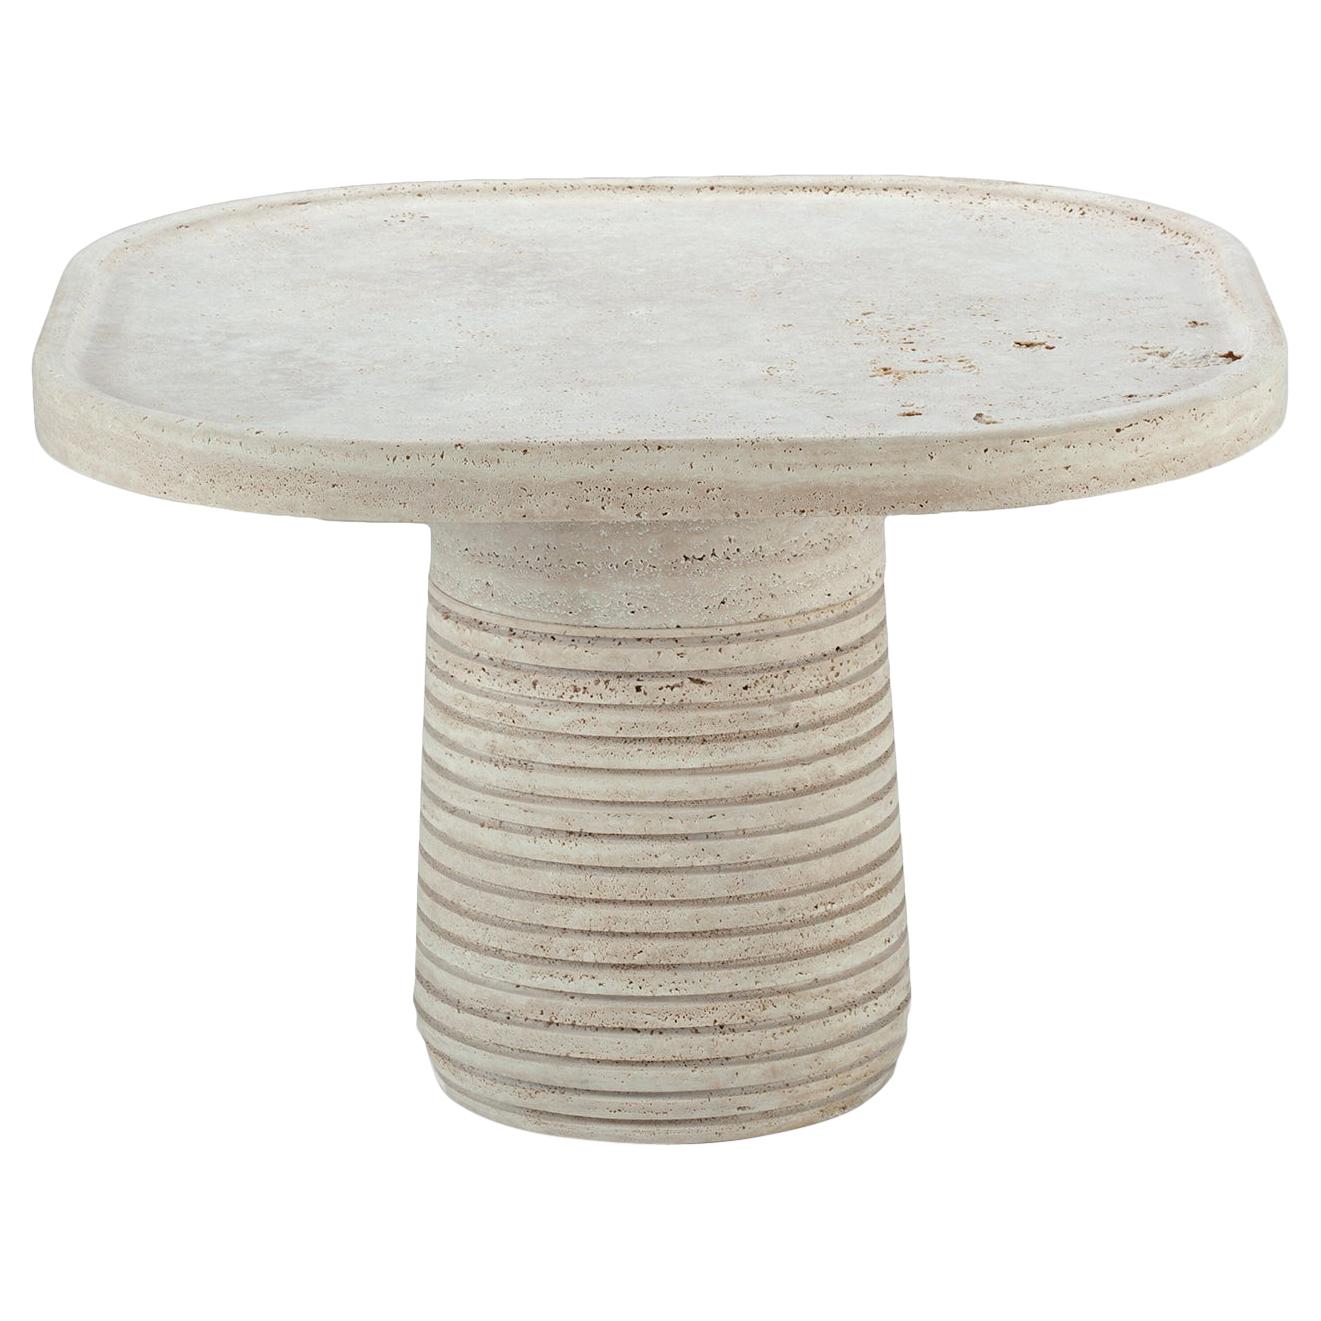 Portuguese Side Table Poppy beige Travertine stone Custom by Mambo